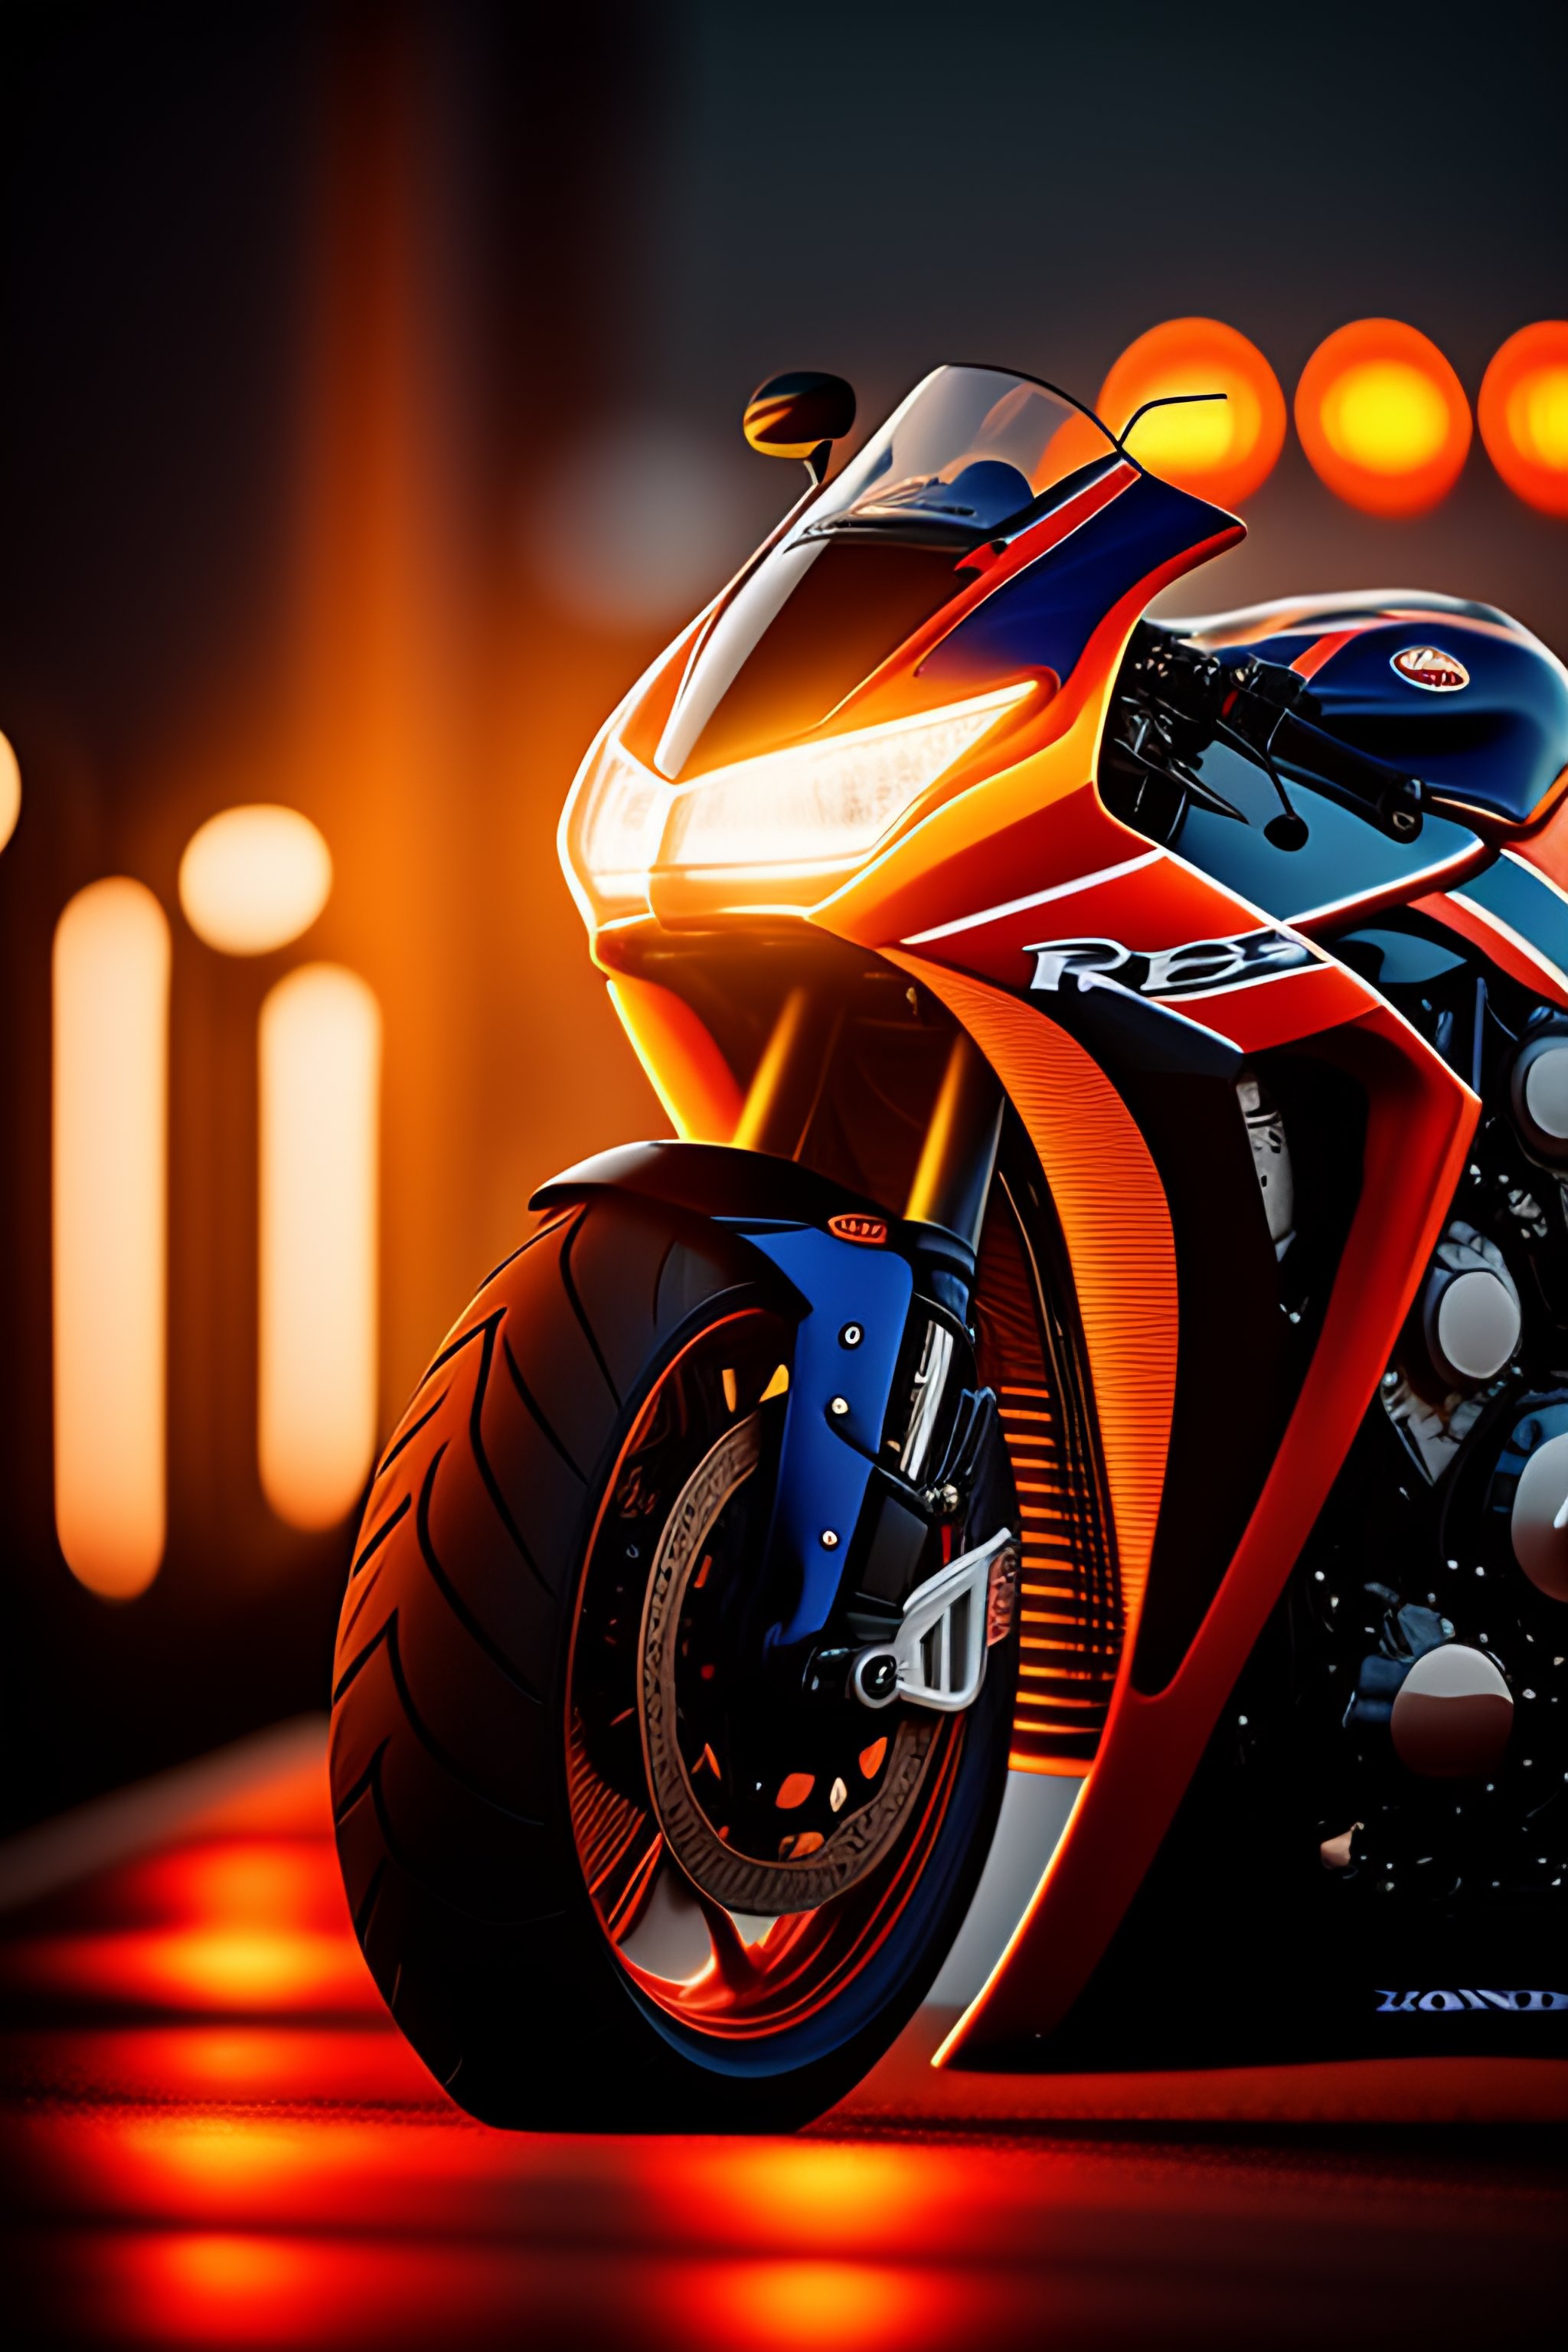 Lexica - Realistic honda 1000rr bike, orange lights, realistic theme ...